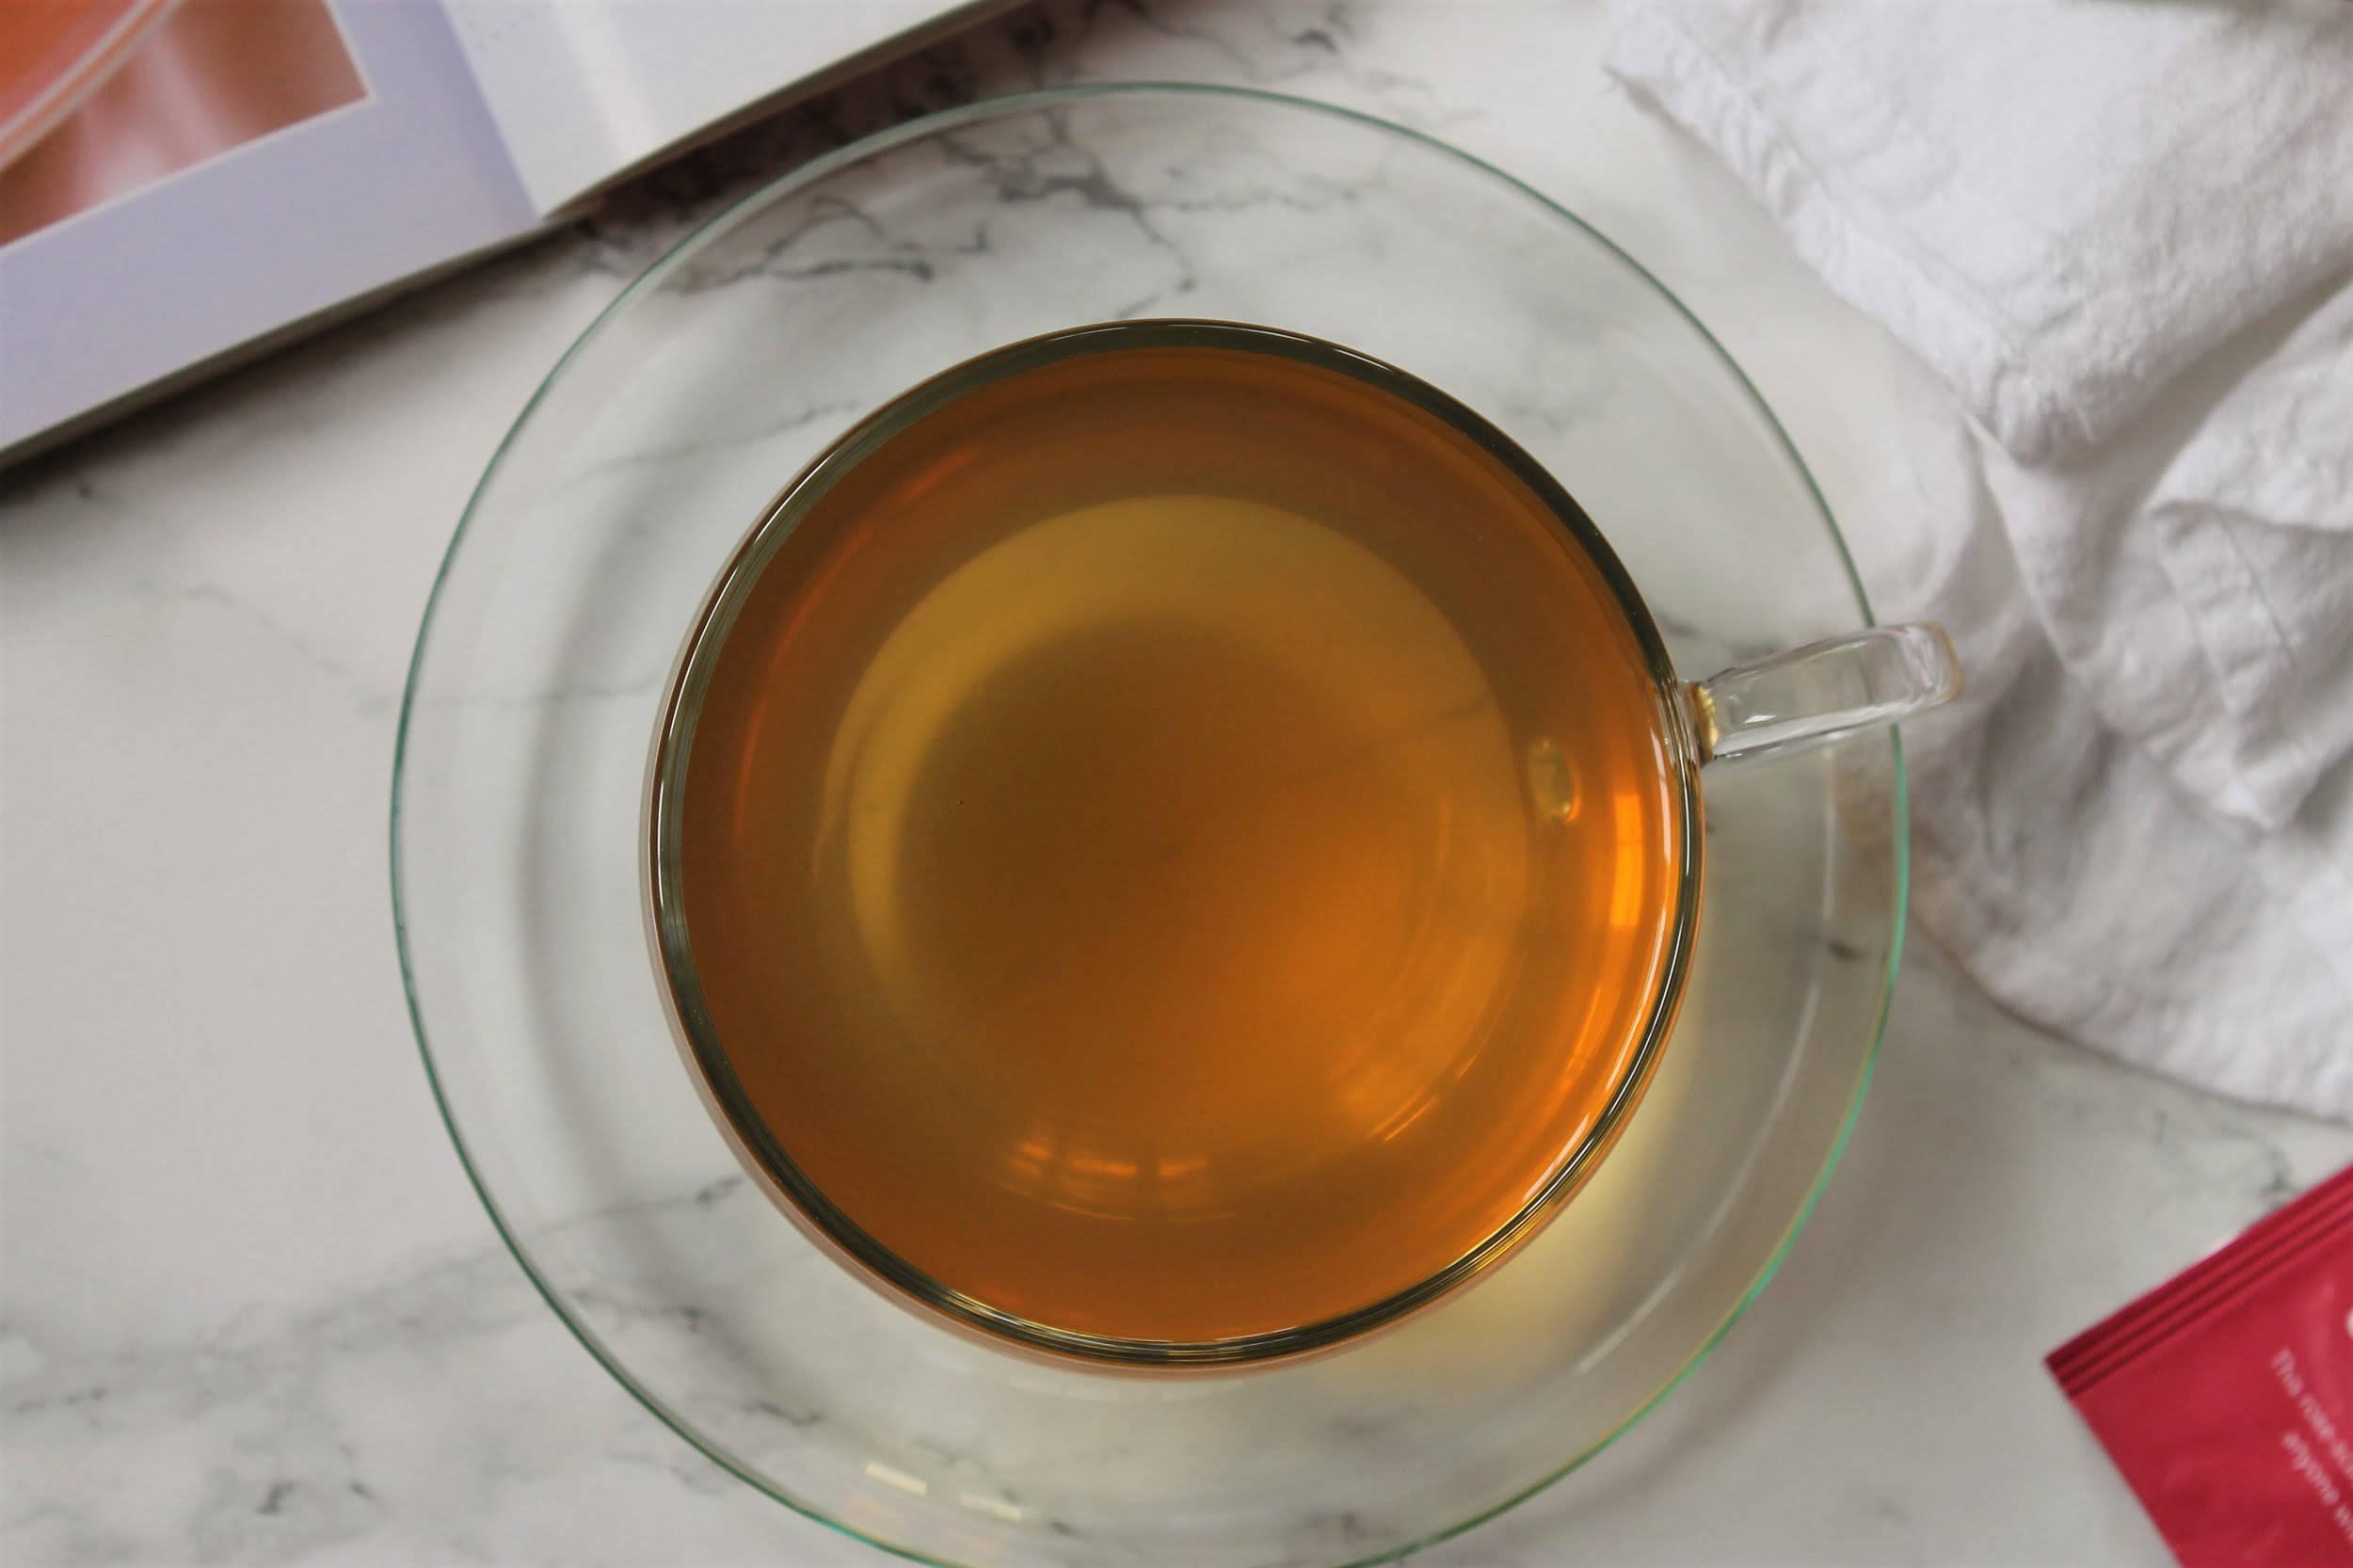 white tea in glass teacup